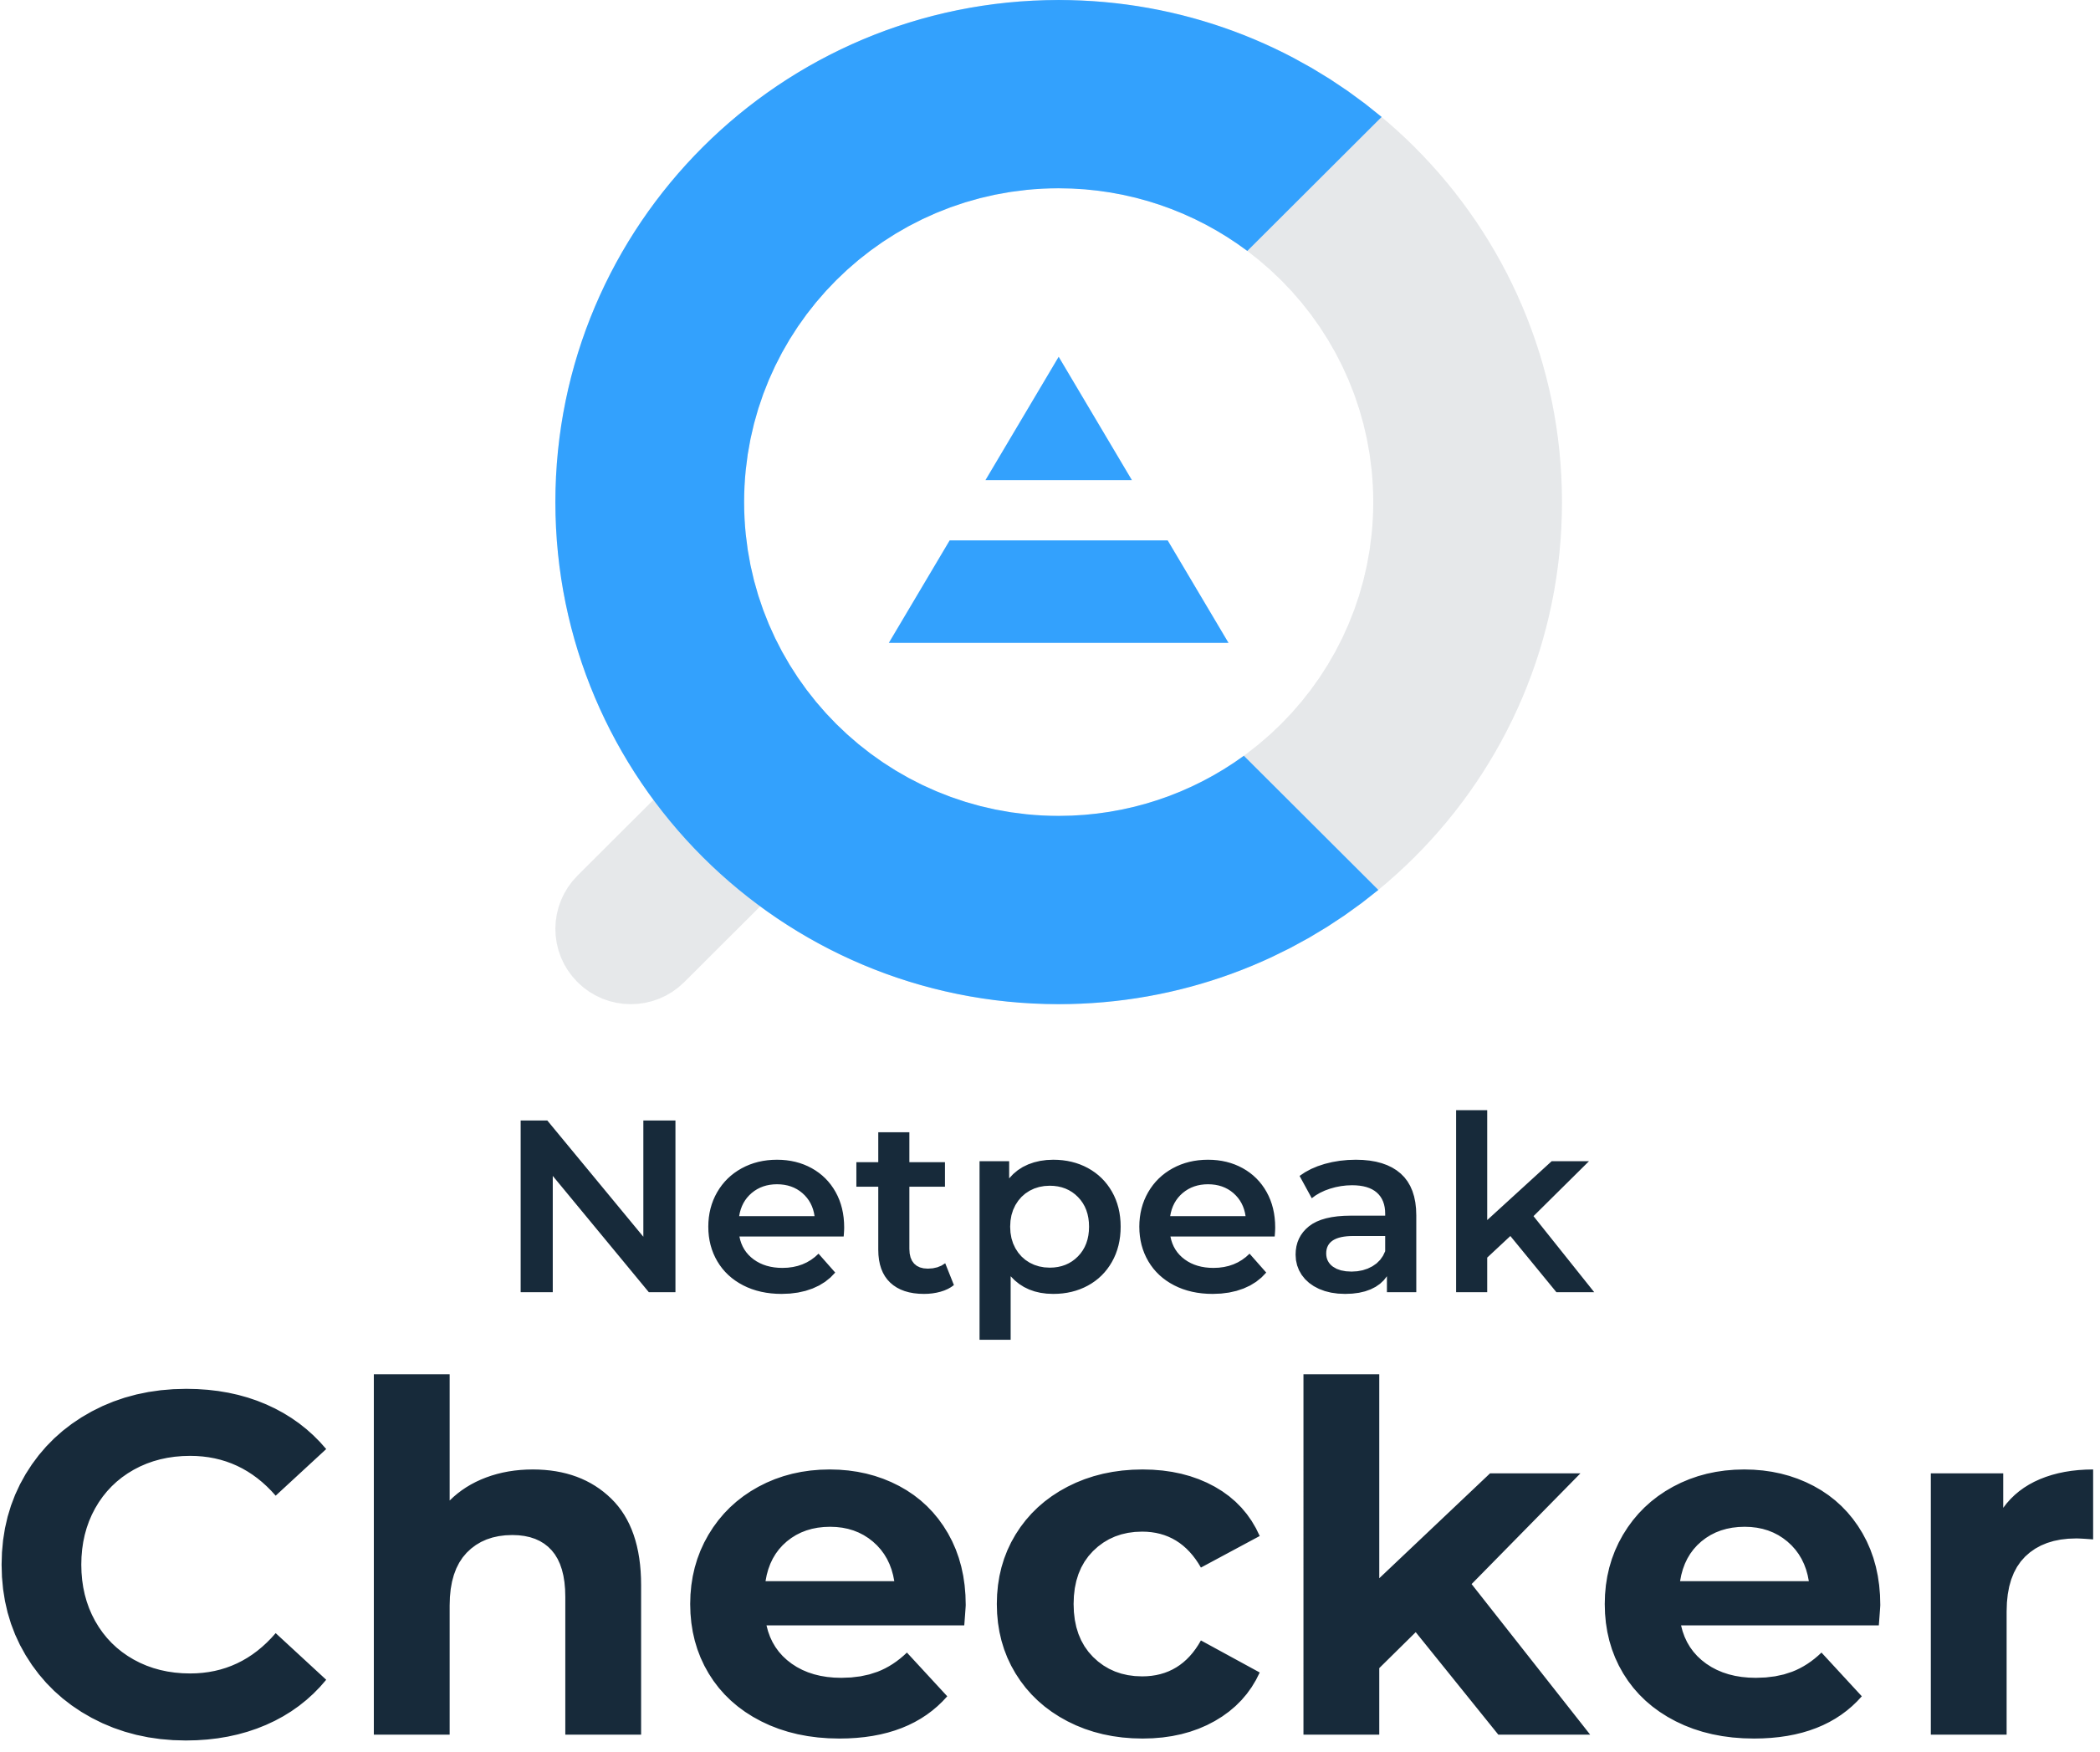 Netpeak Checker Logo